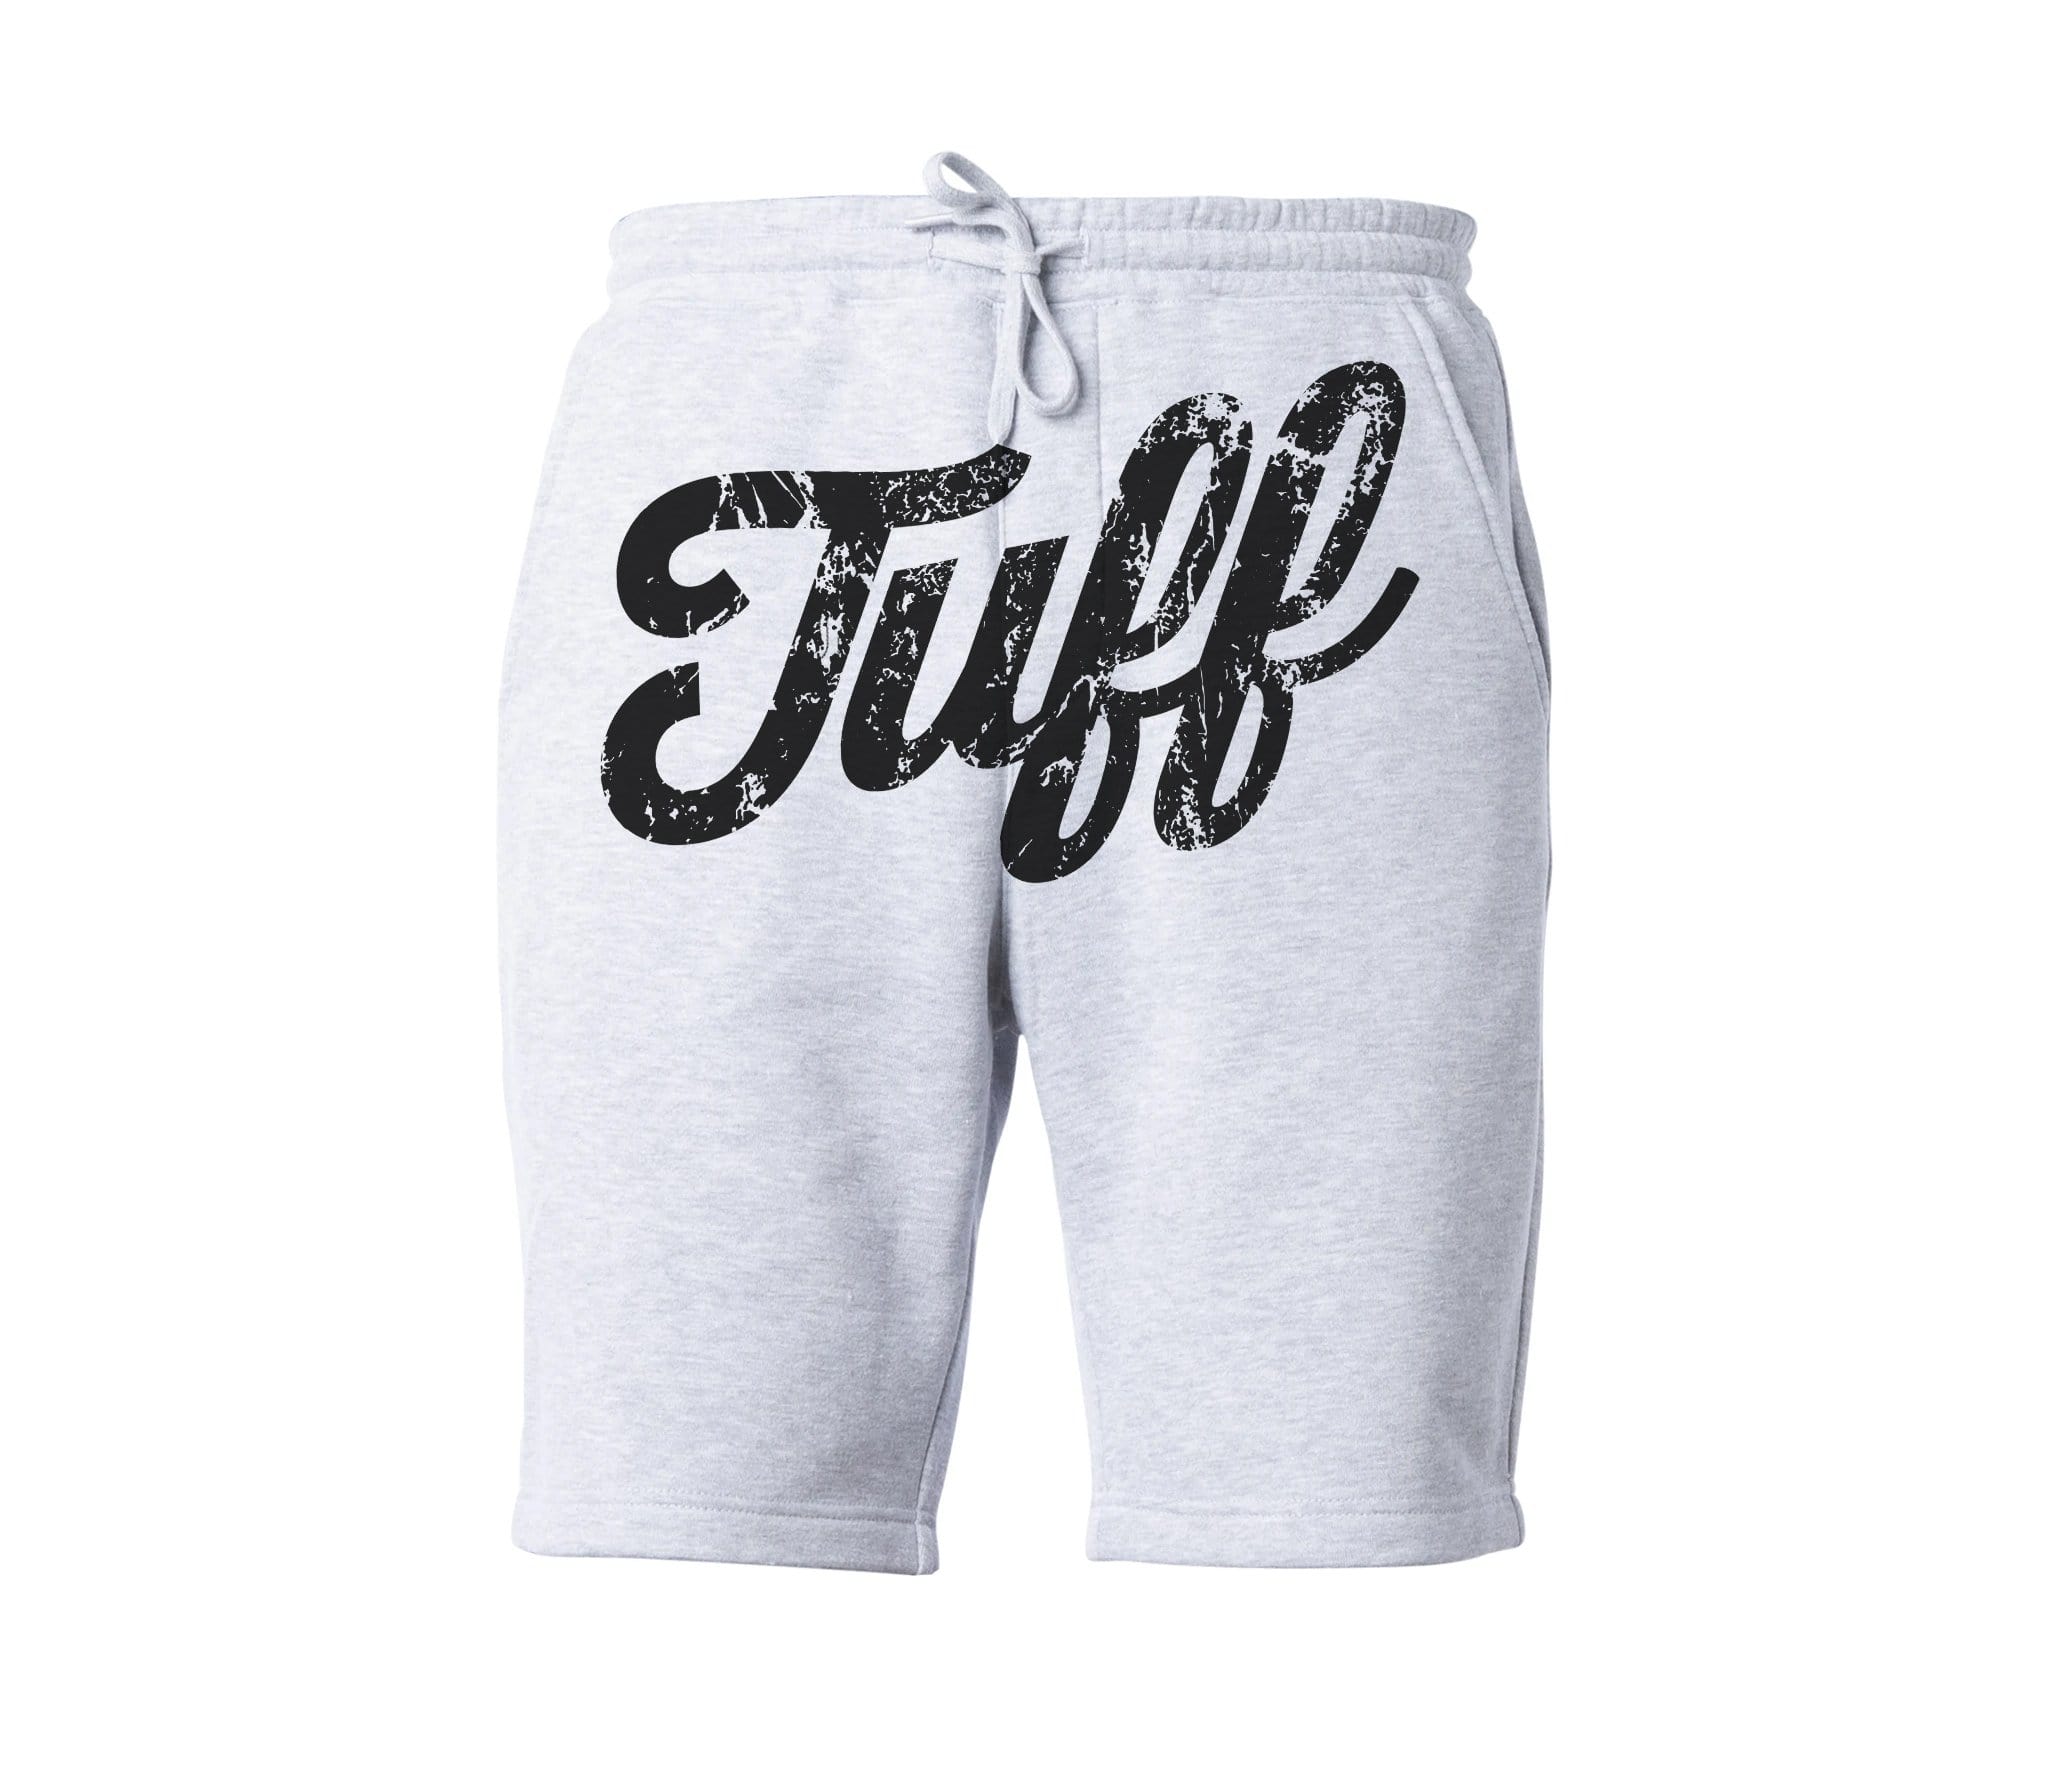 TUFF Front Script Tapered Fleece Shorts